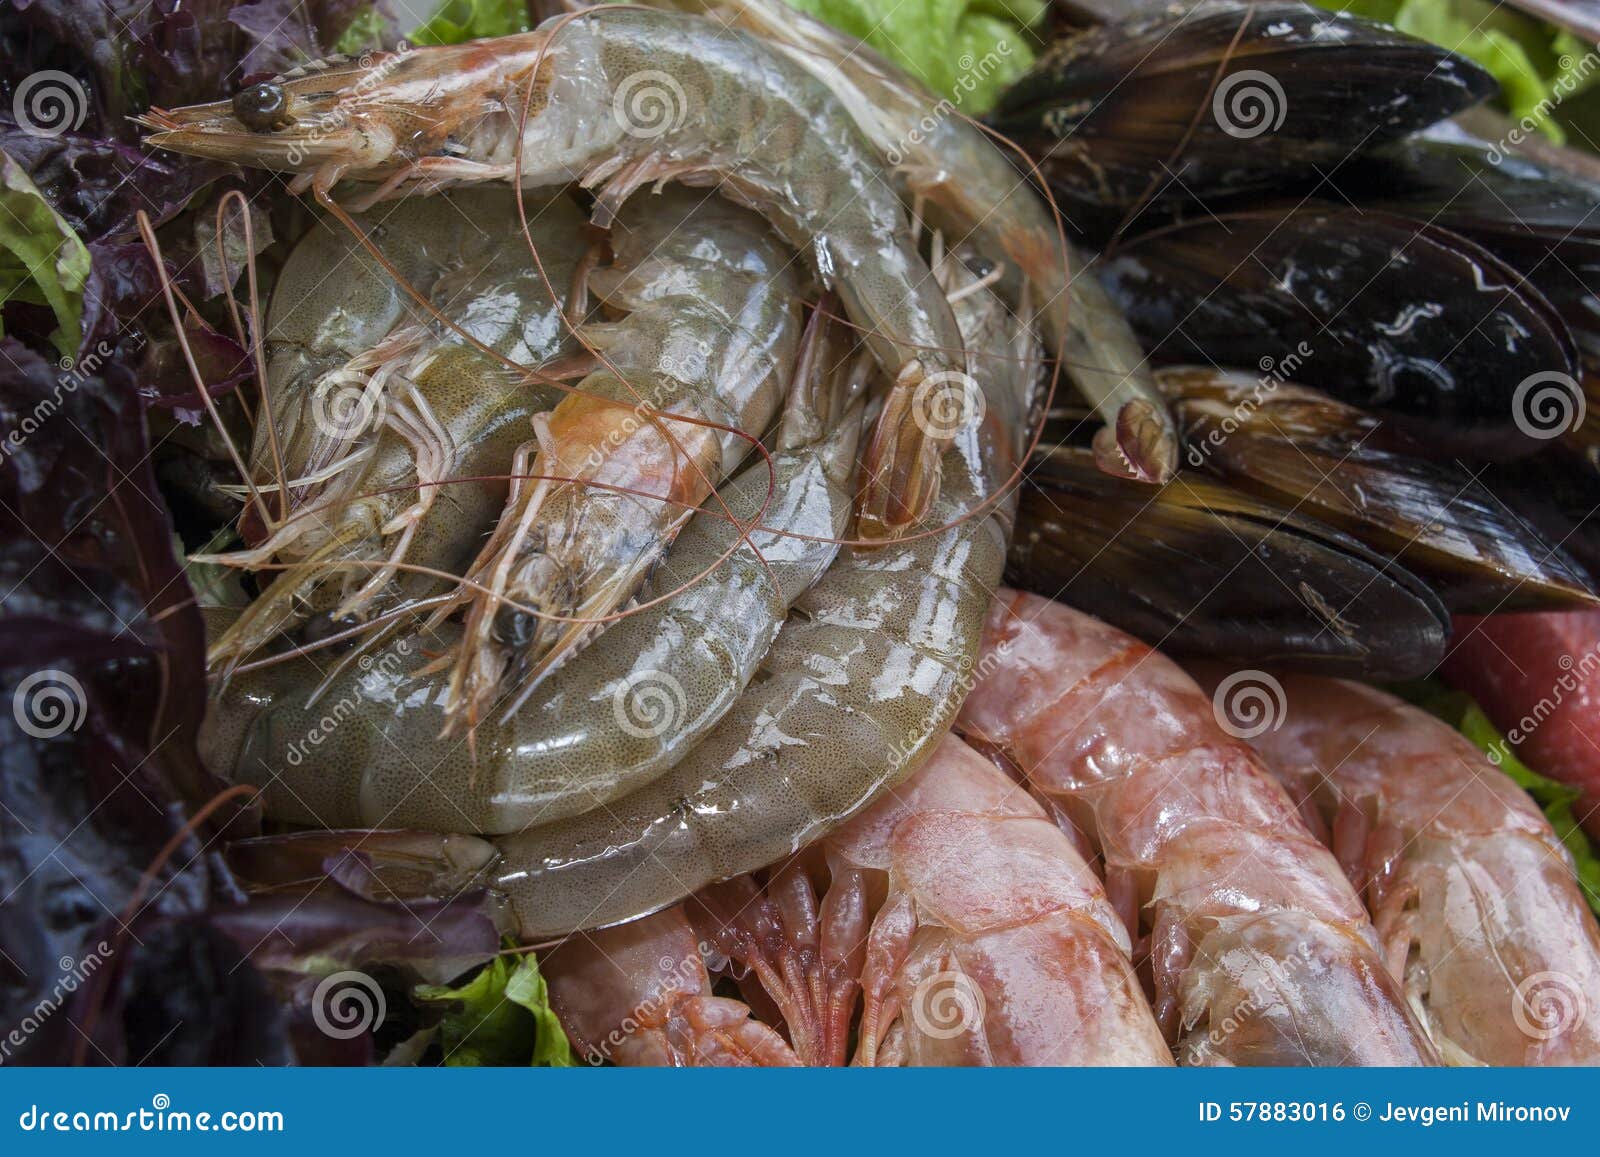 fresh shrimps